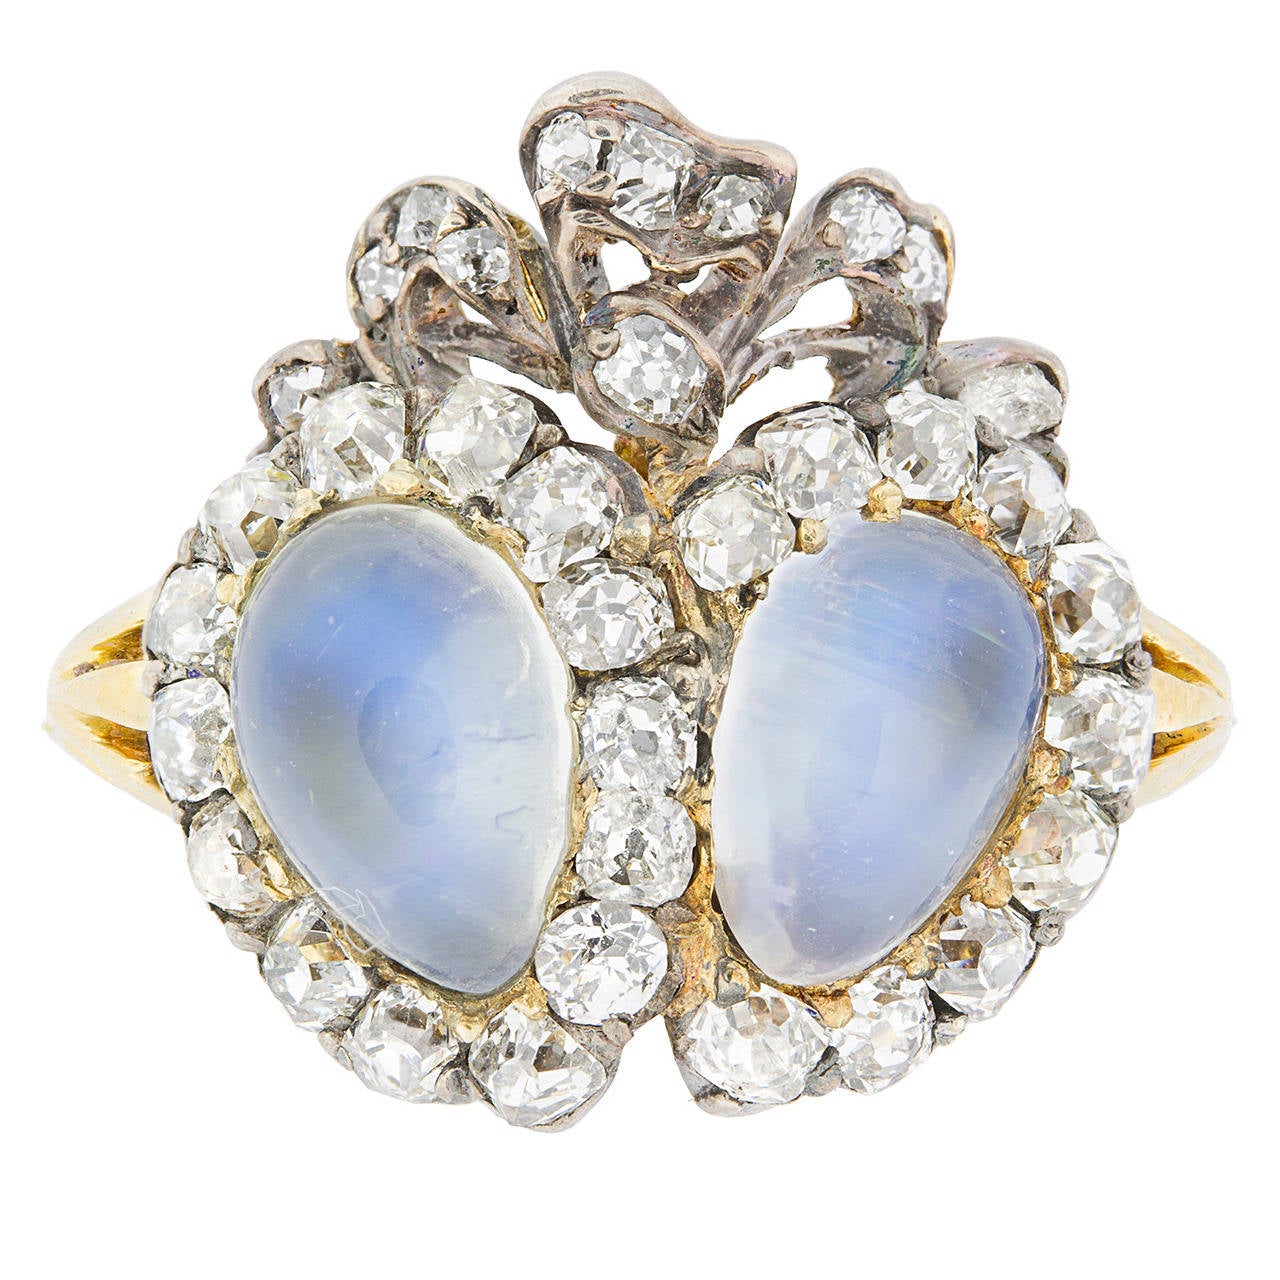 Victorian Double Heart Moonstone Diamond Ring